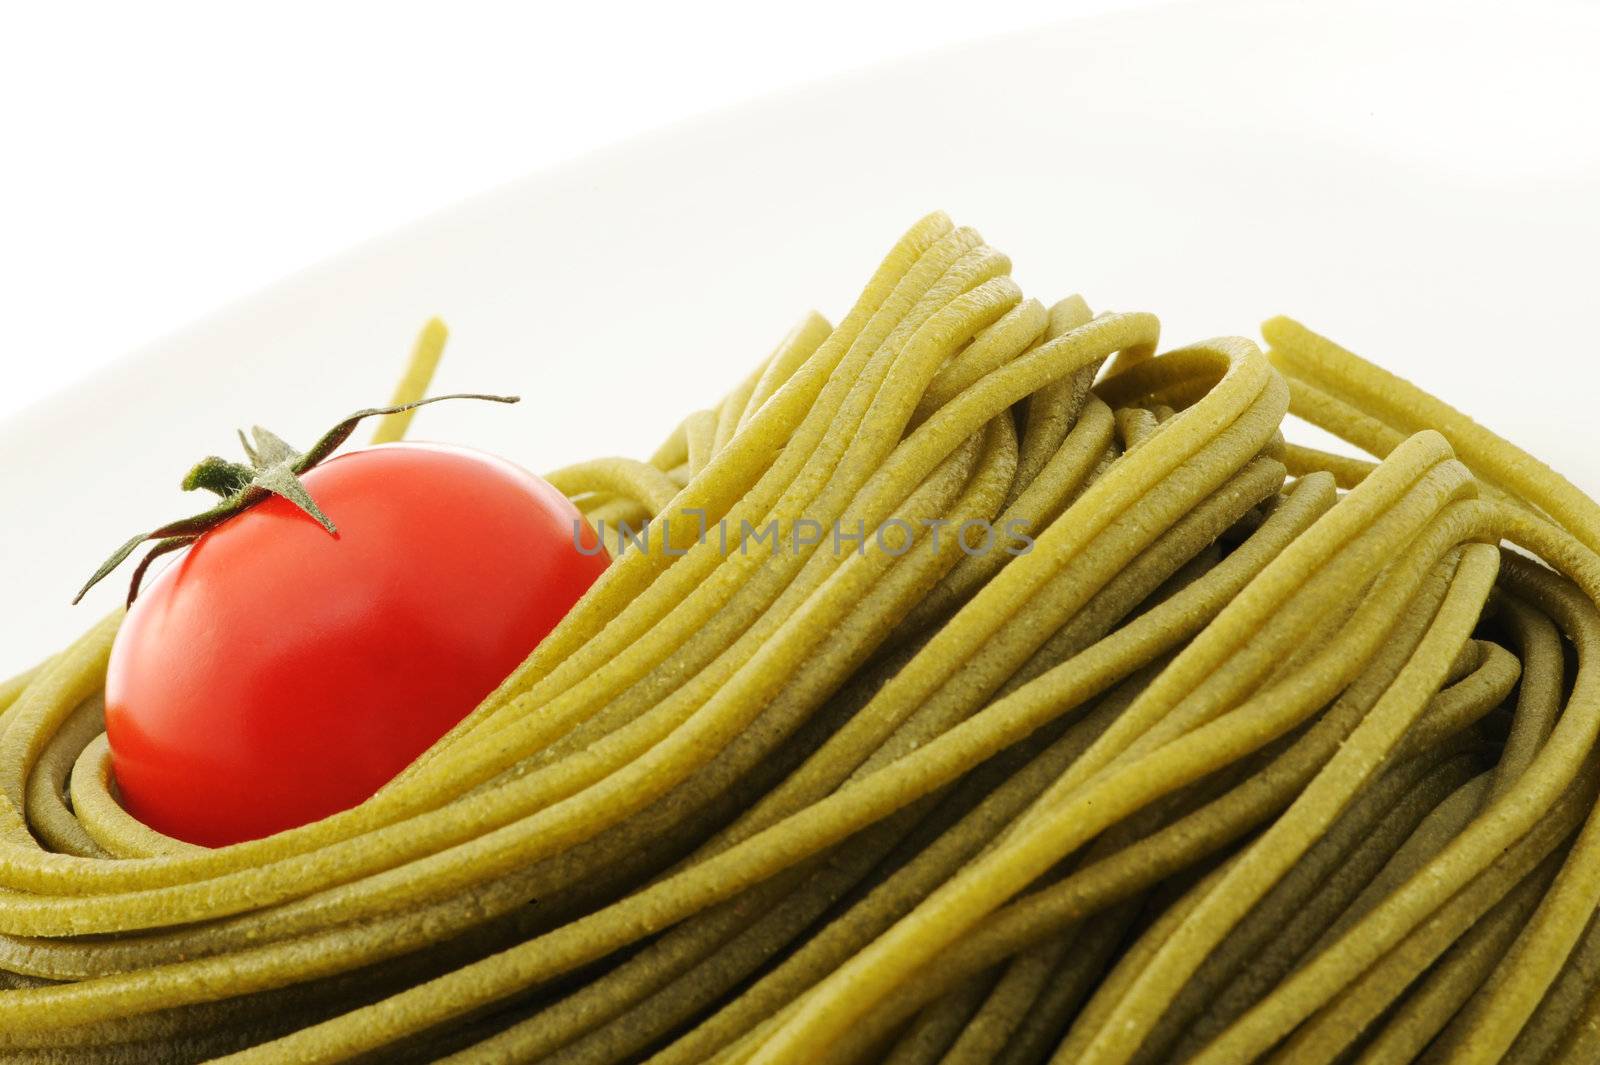 Italian pasta dish, other food photo on my portfolio